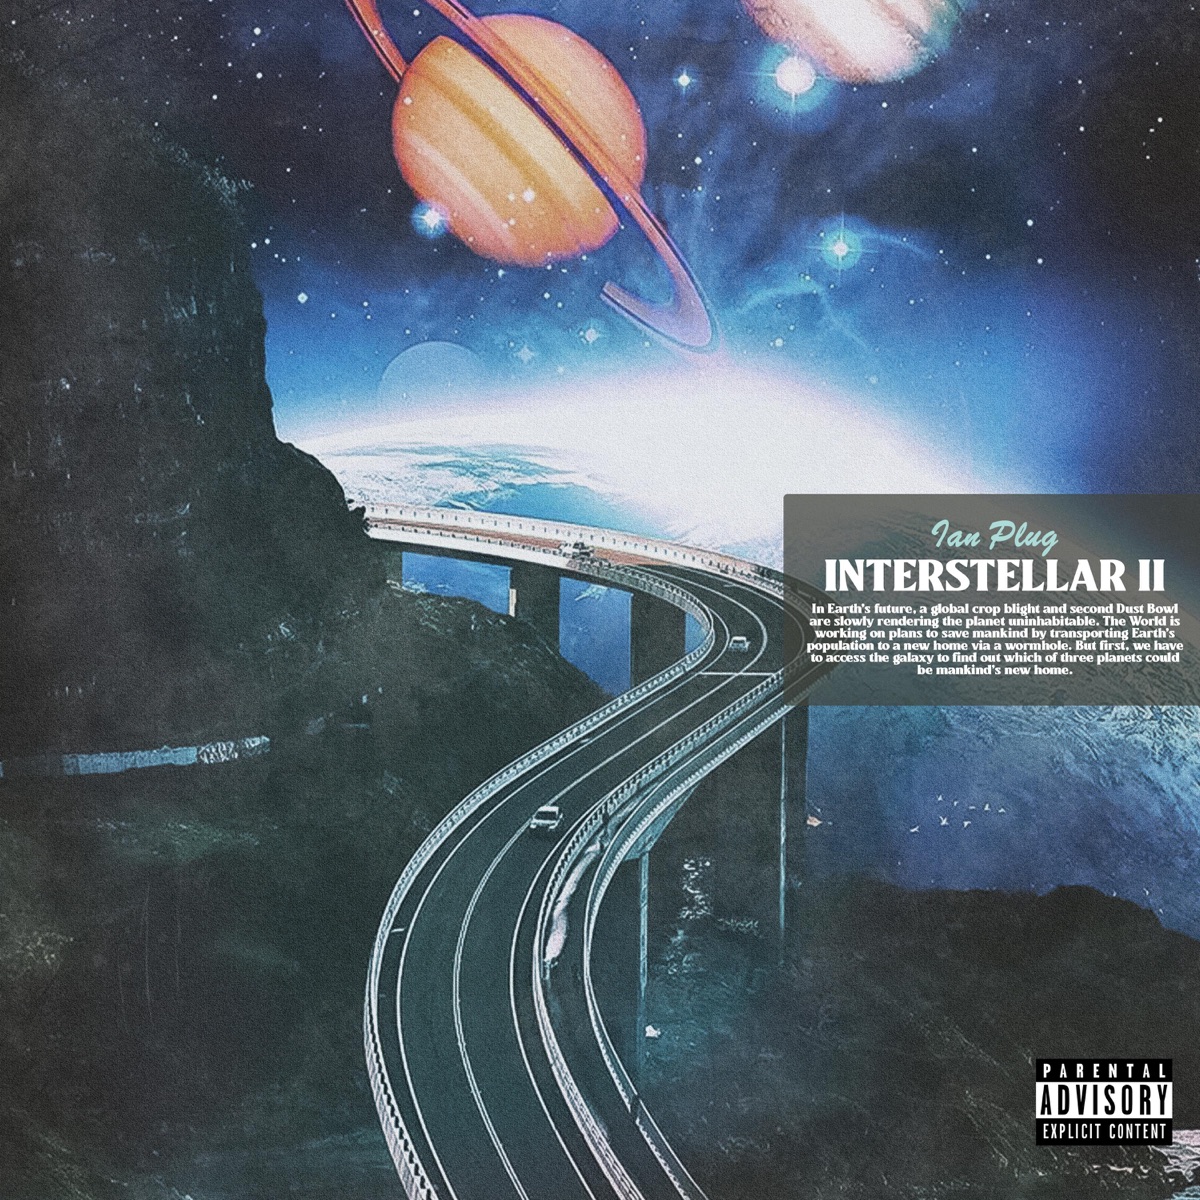 interstellar 2